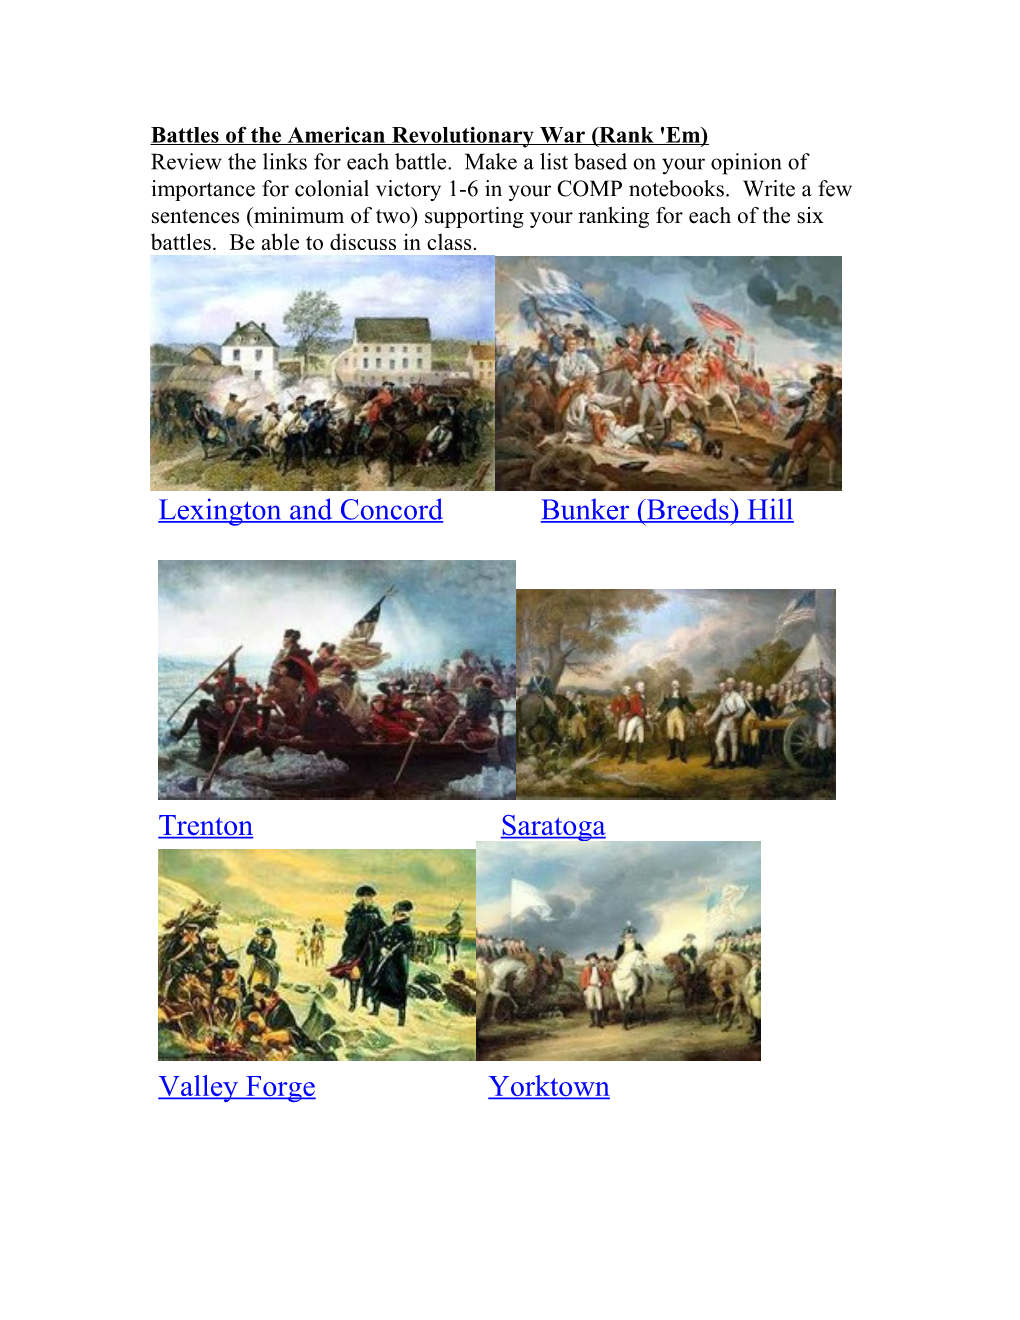 Major American Victories of the Revolutionary War